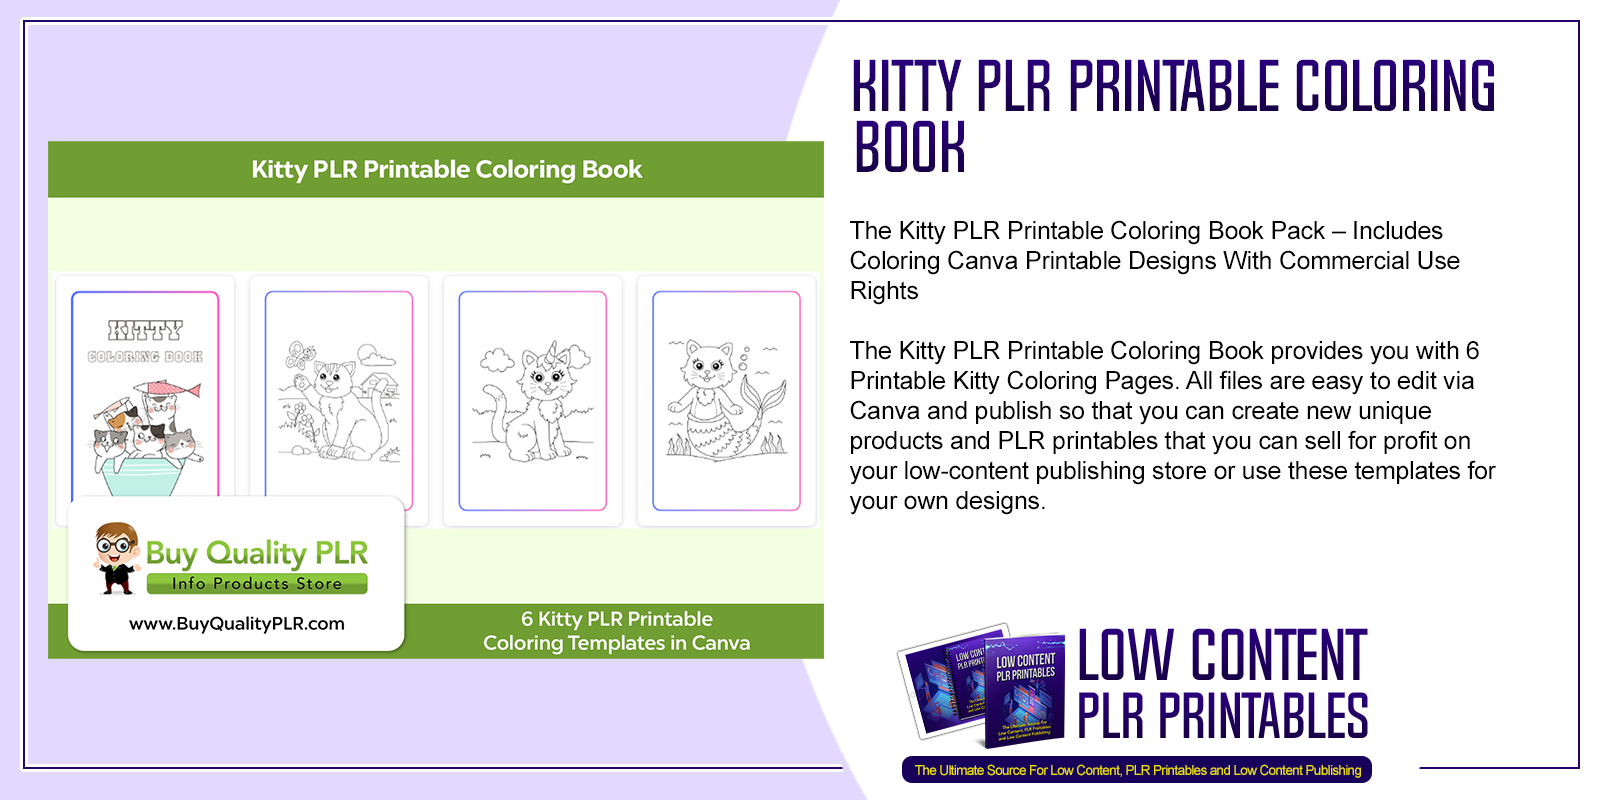 Kitty PLR Printable Coloring Book